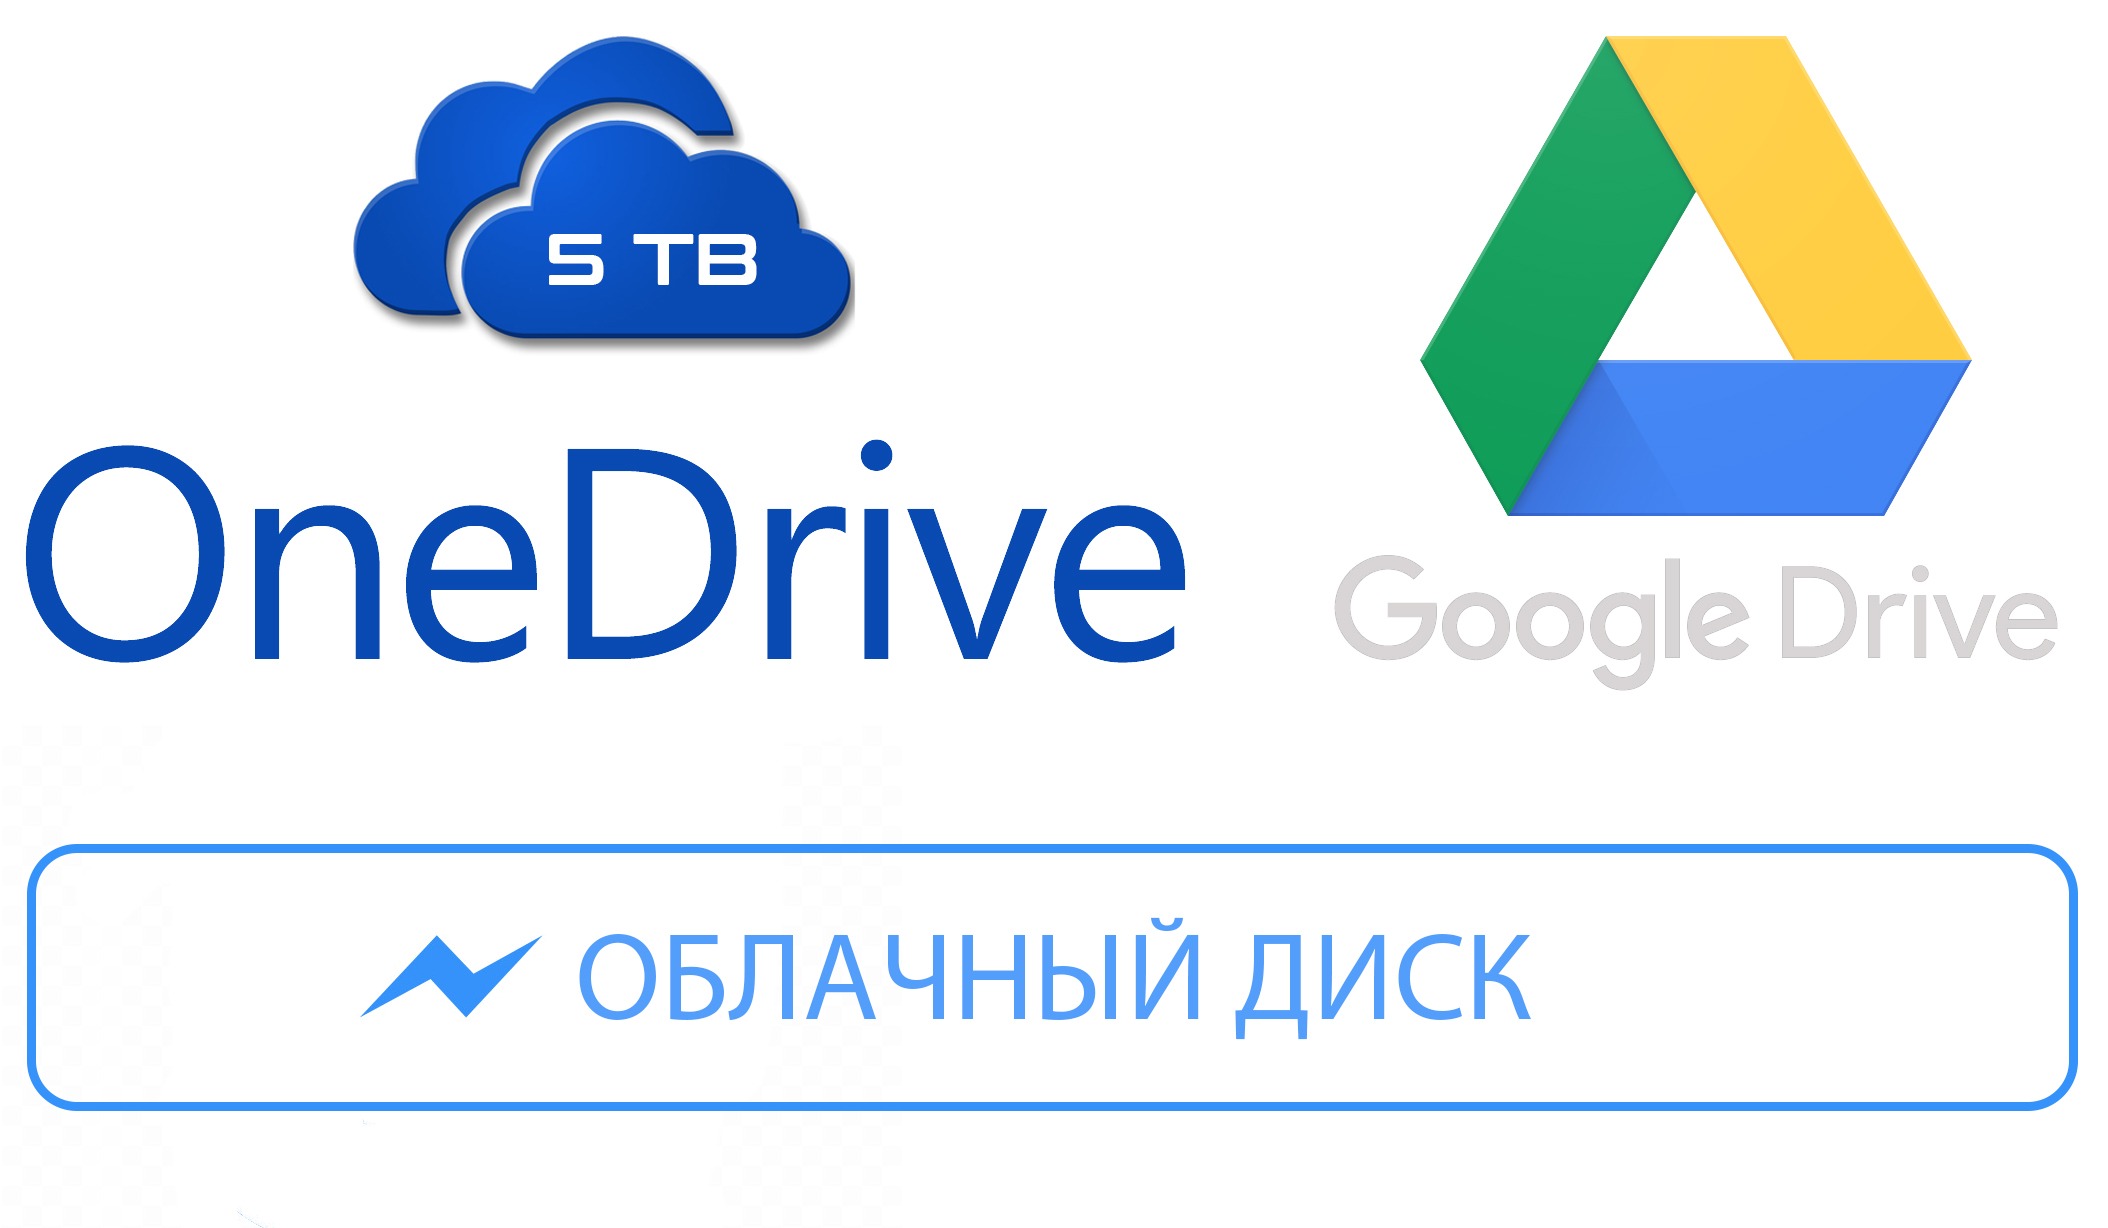 Безлимитный Google Drive аккаунт.. Гугл фото безлимит. Получаем безлимитный Google Drive.